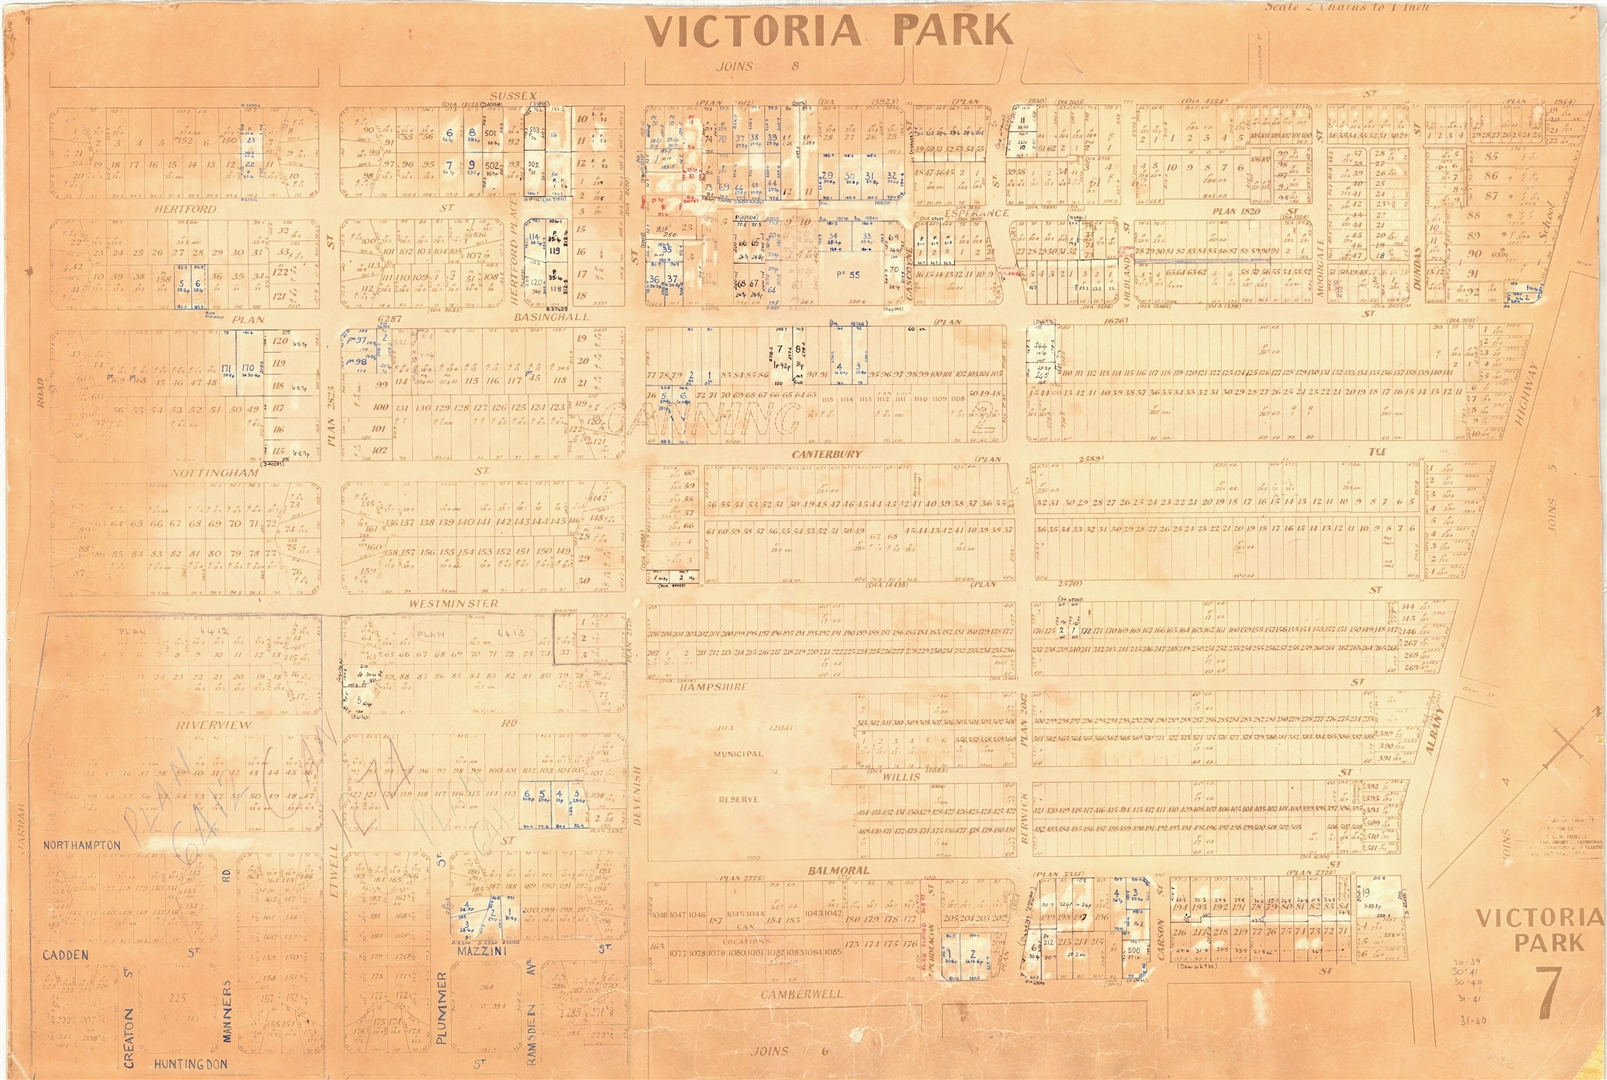 Victoria Park Plan 7 - 2 Chain Image